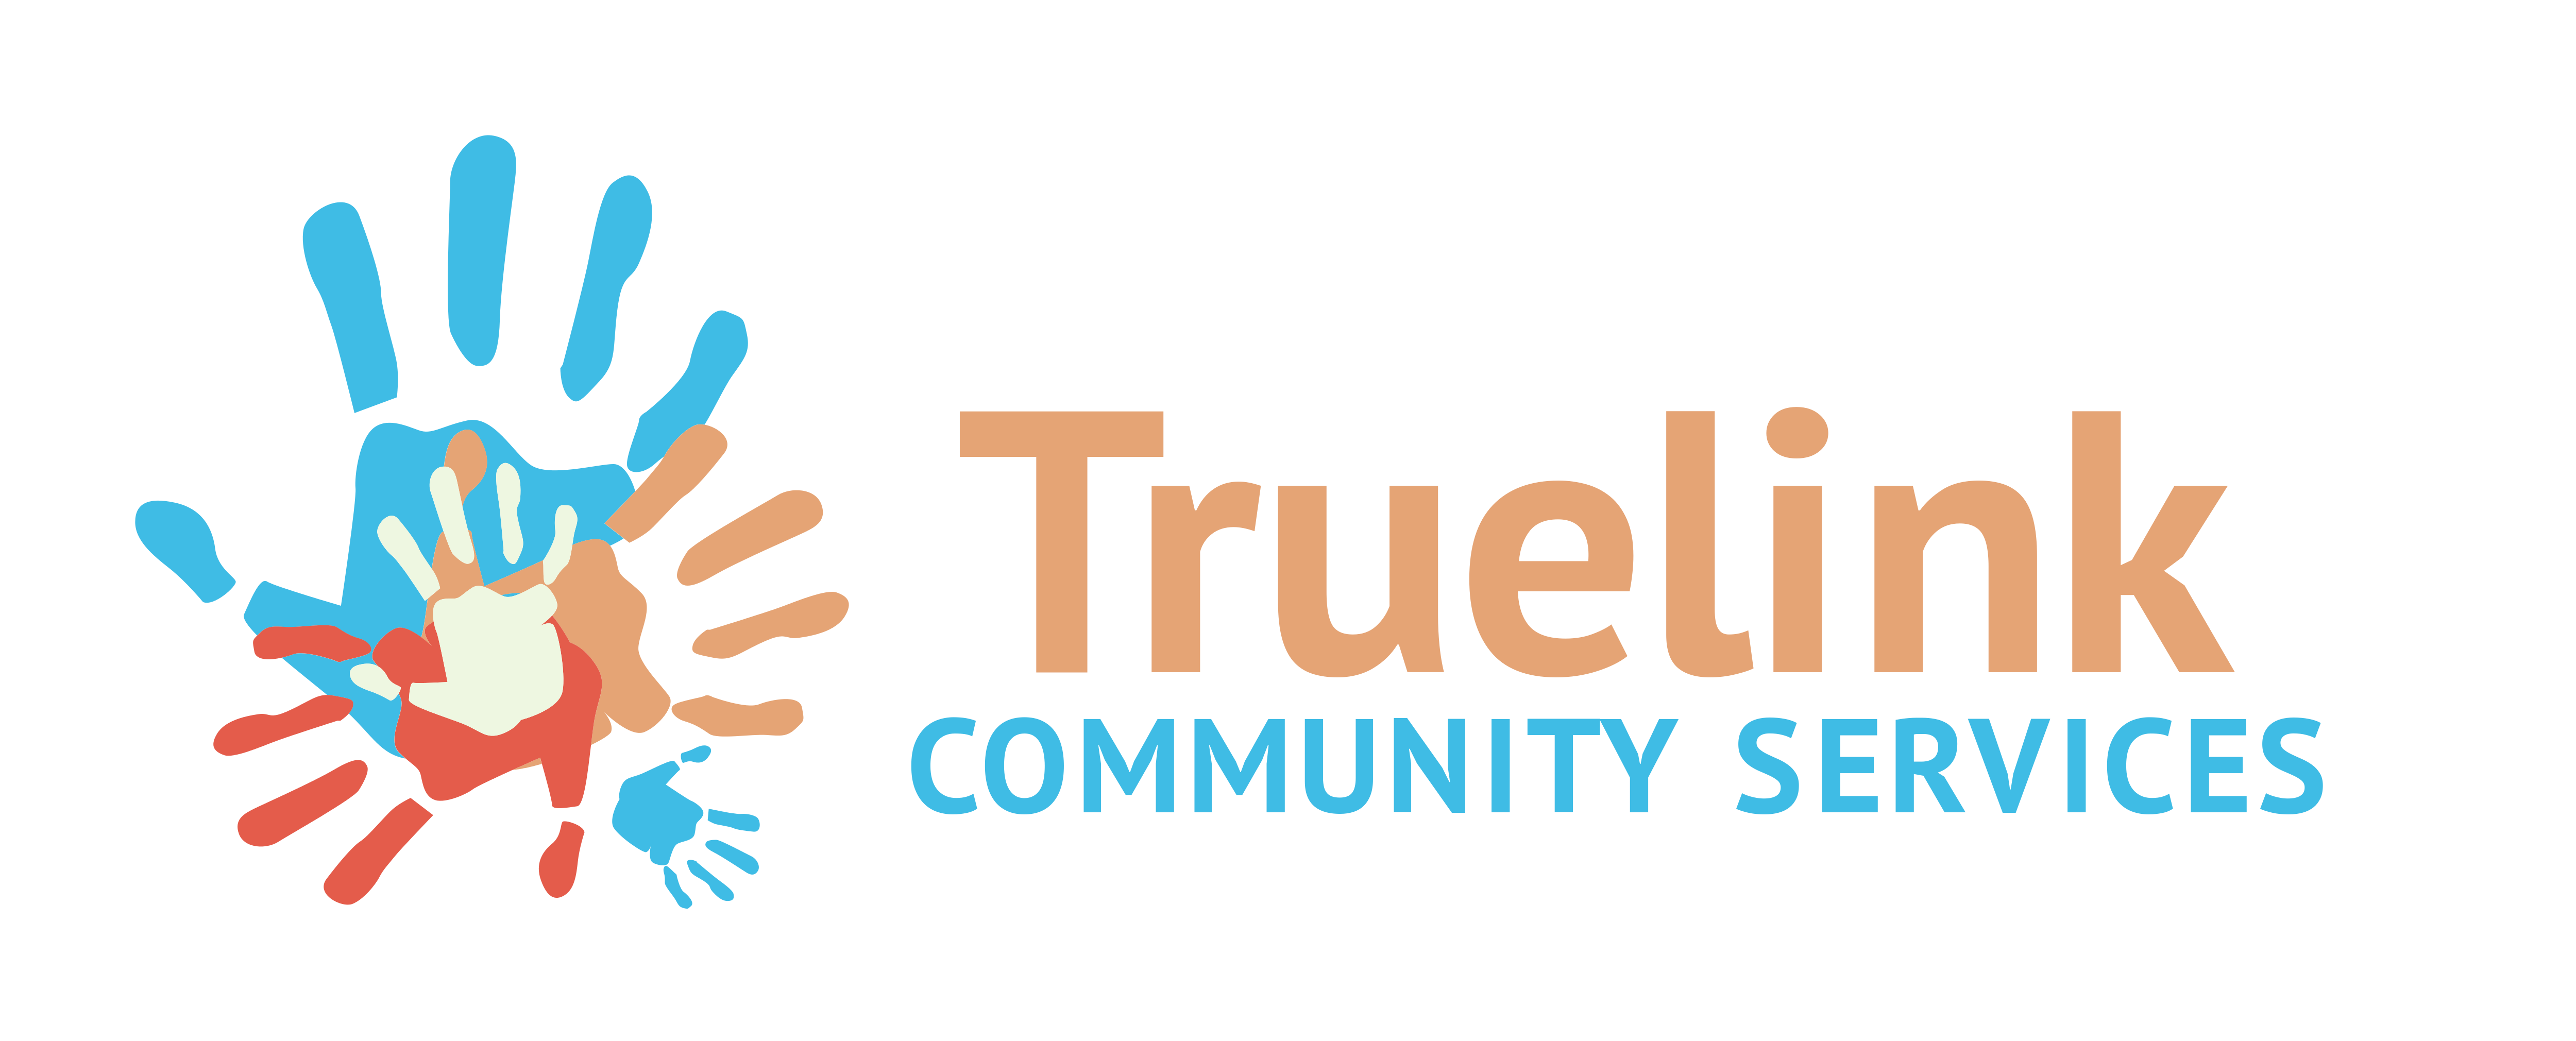 True Link Community Services